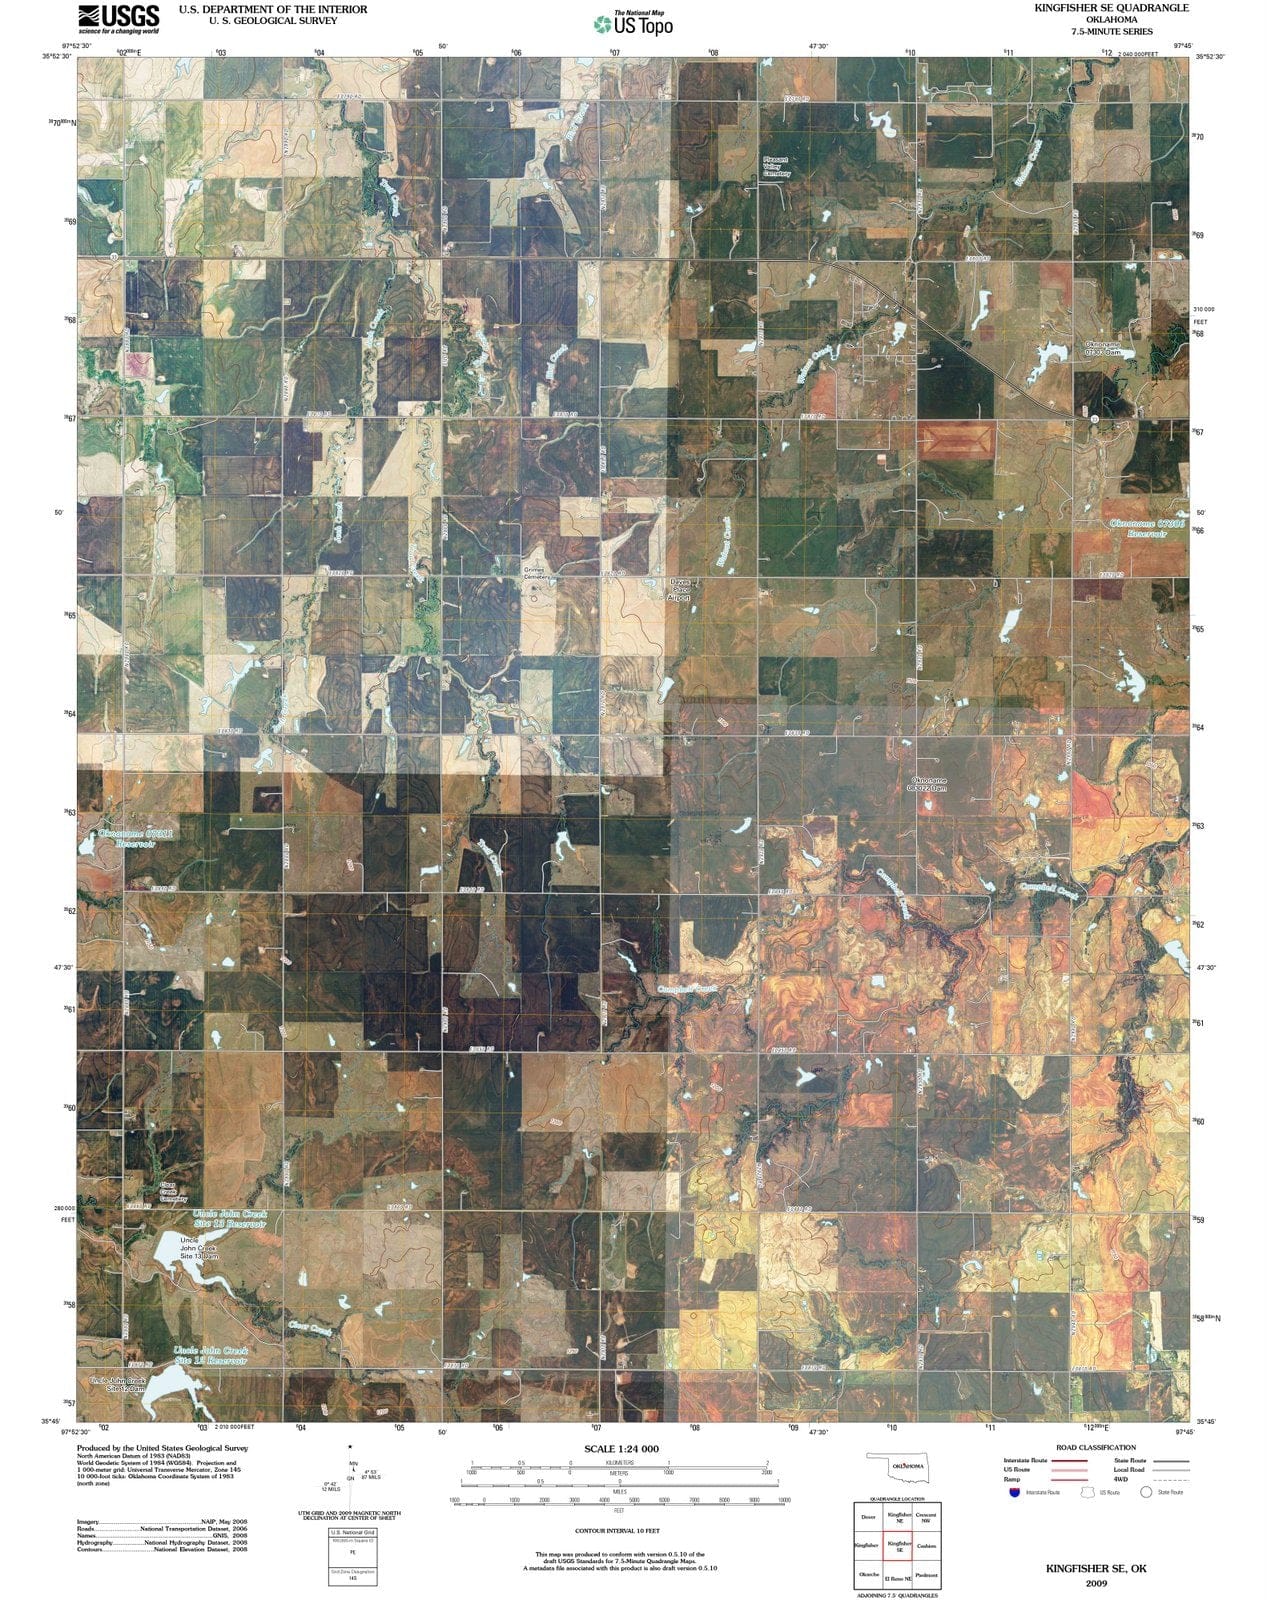 2009 Kingfisher, OK - Oklahoma - USGS Topographic Map